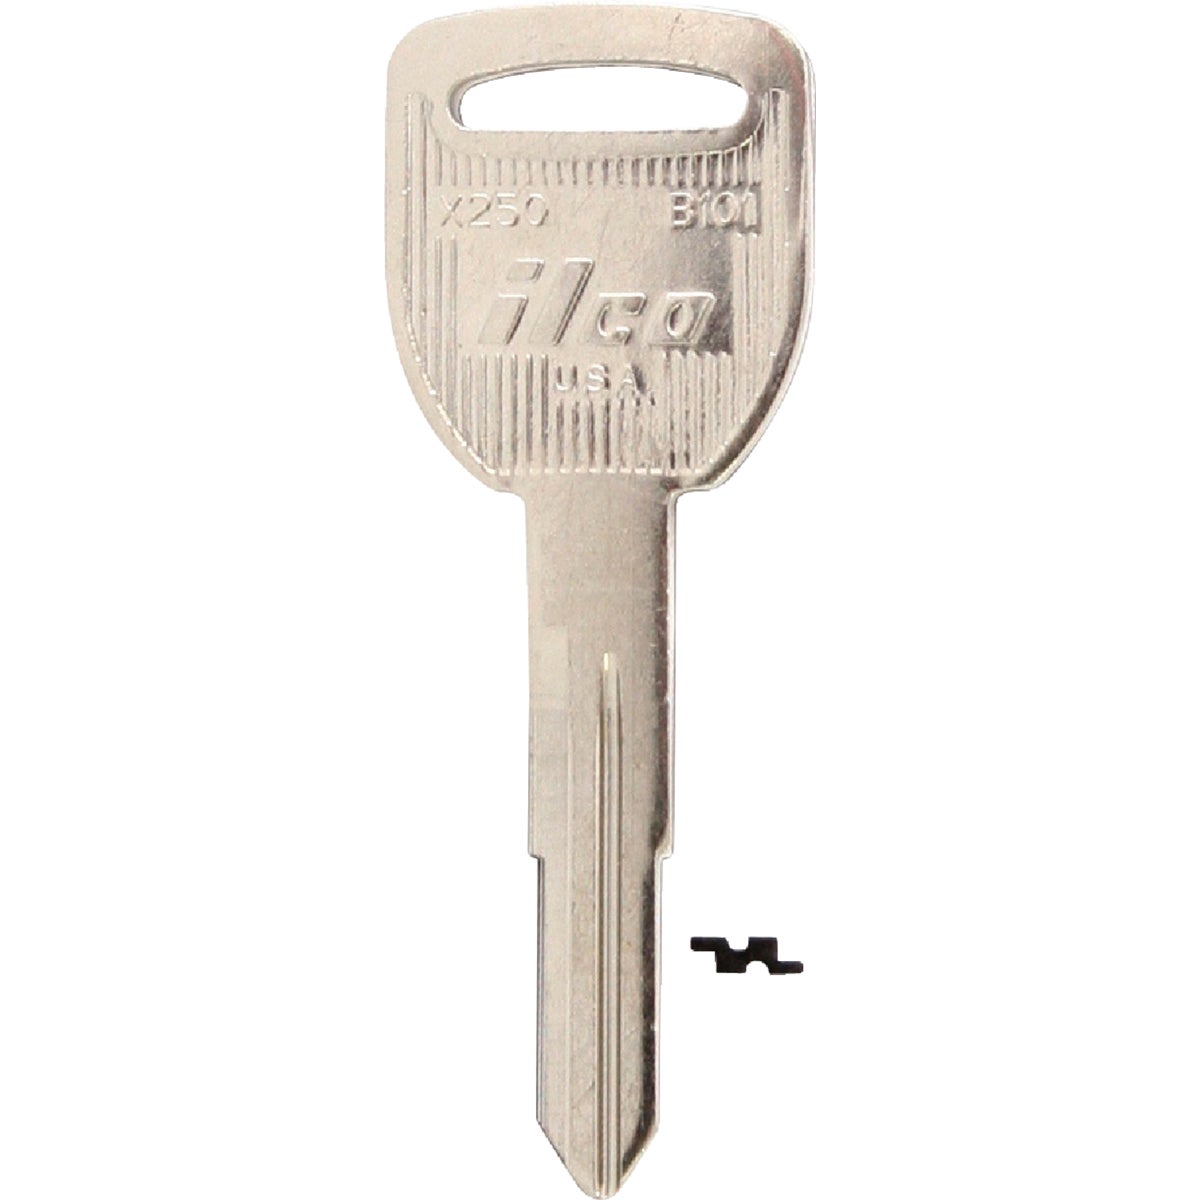 ILCO Honda Nickel Plated Automotive Key, B101 / X250 (10-Pack)